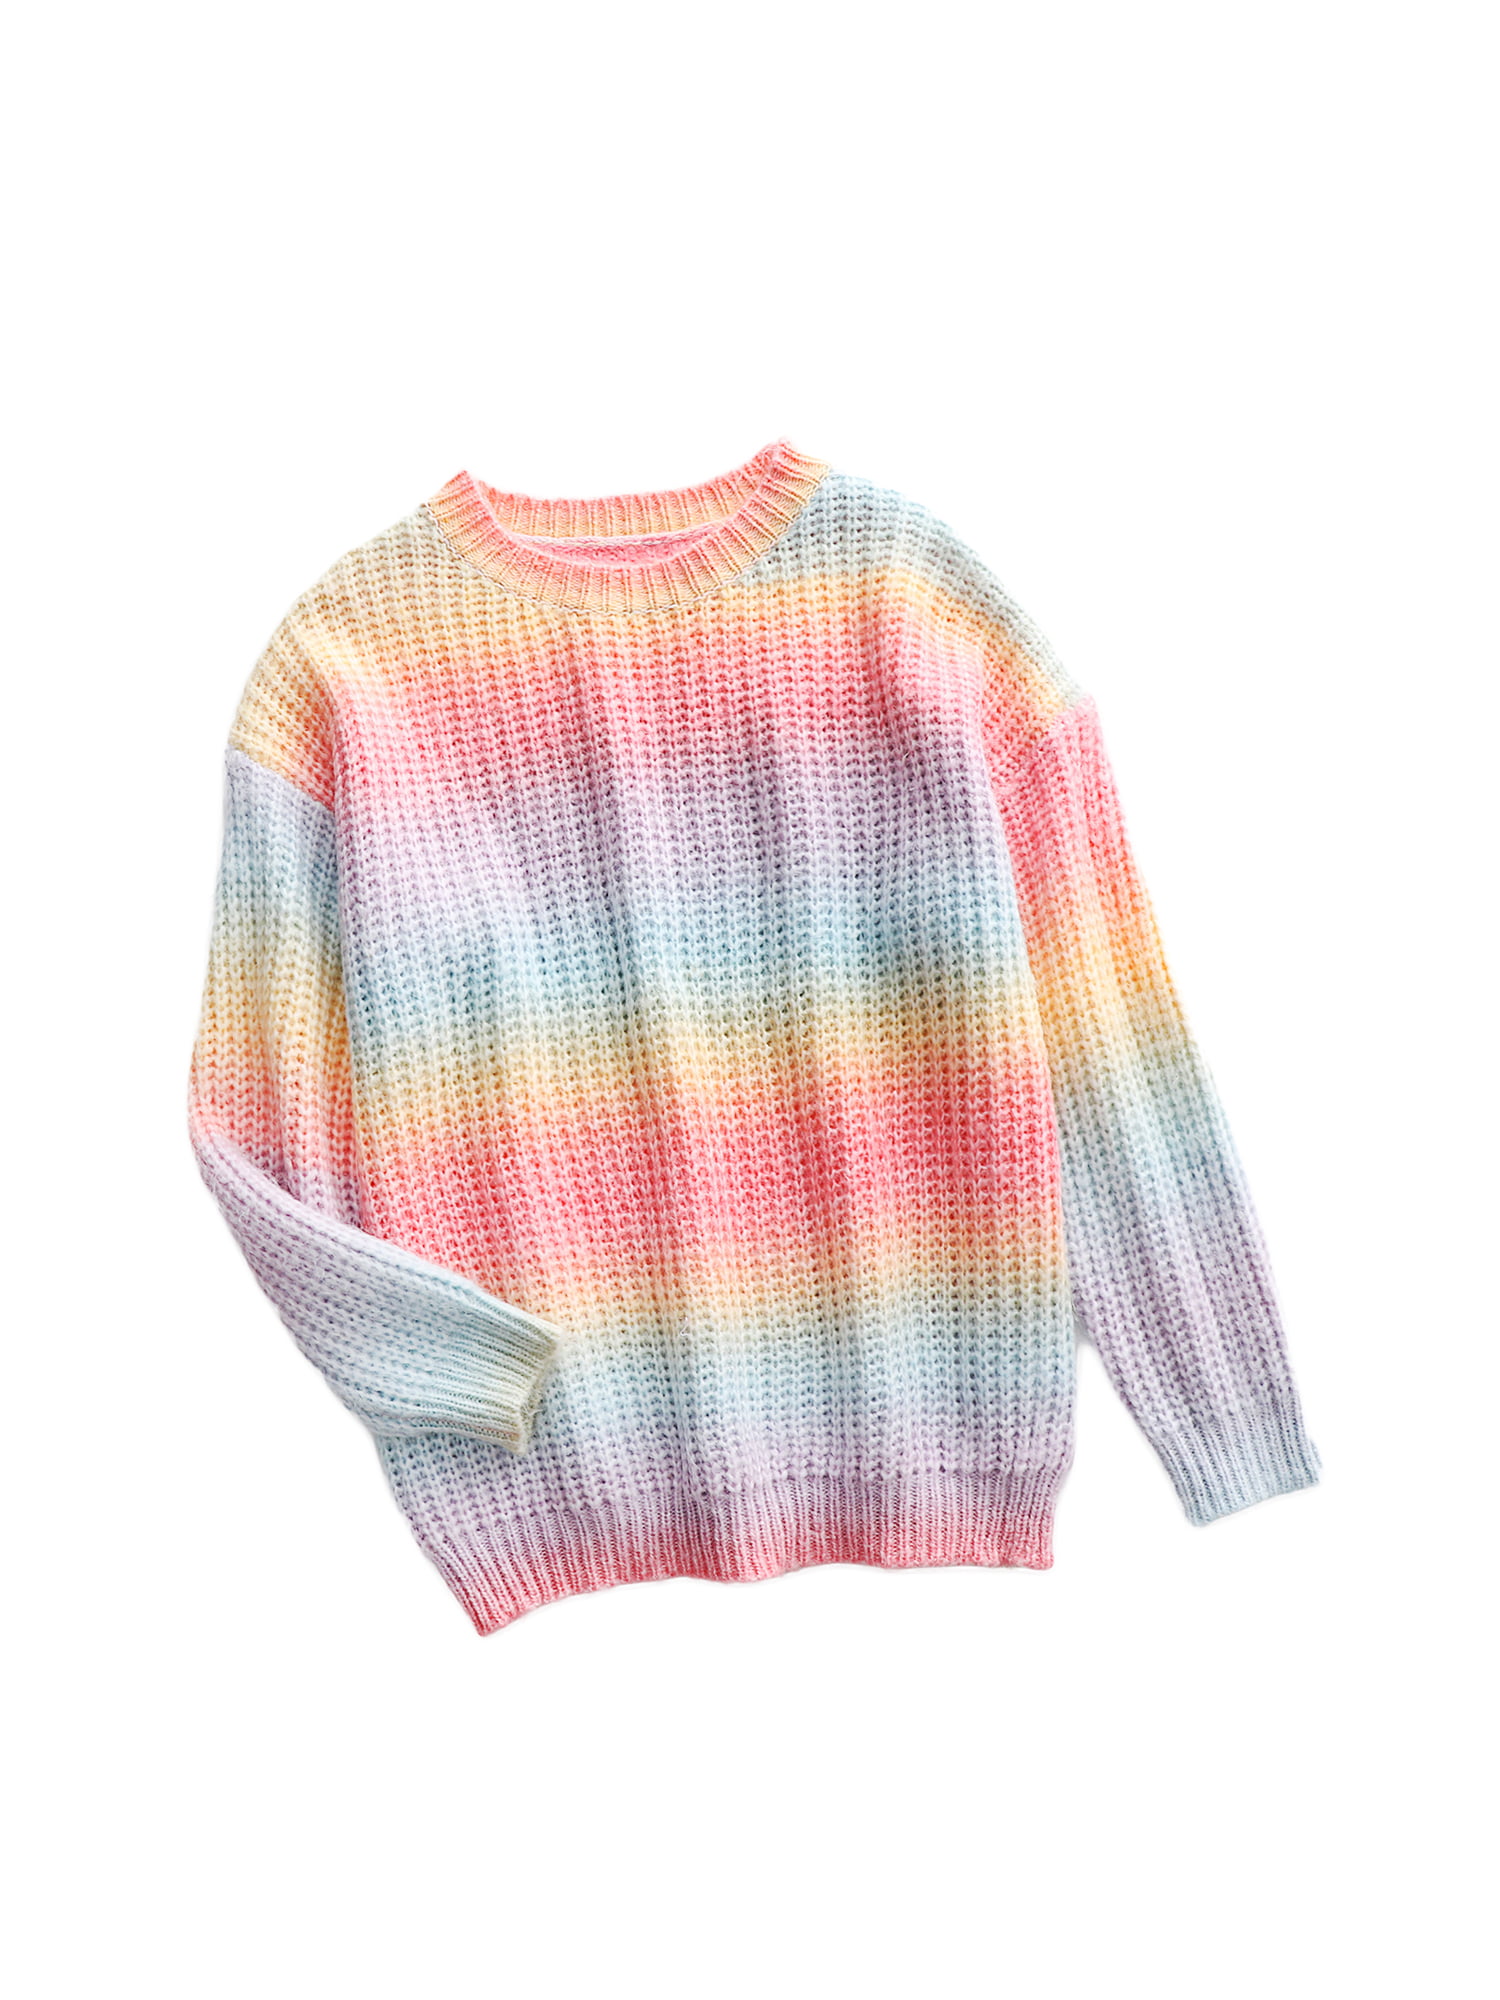 NEW Shumanqi Womens Colorful Rainbow LV Beaded Bear Knit Sweater